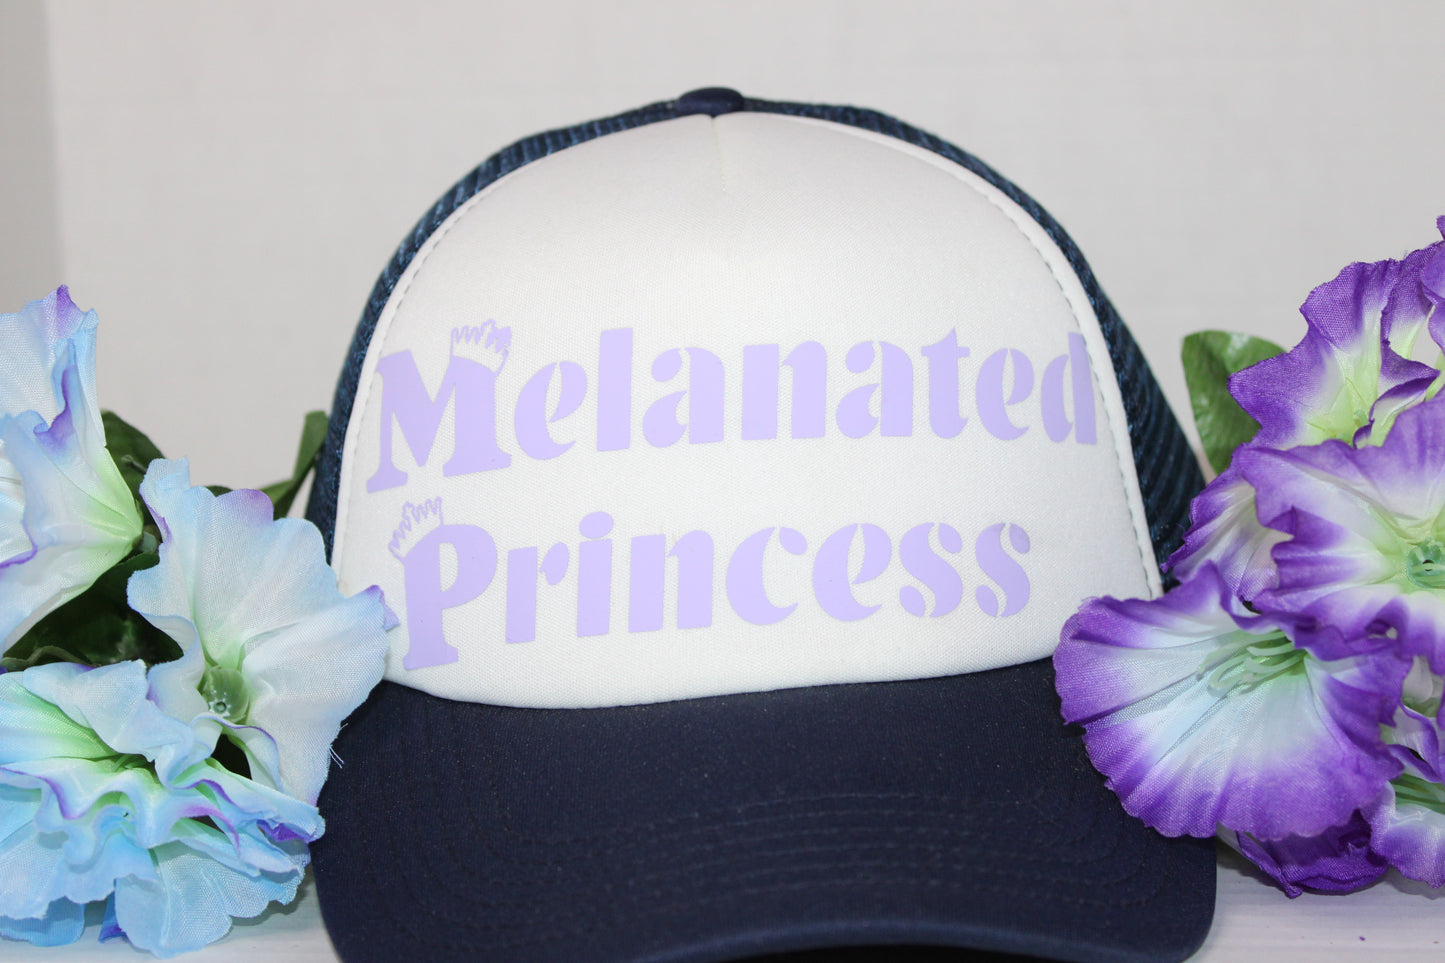 Melanated Princess Hat